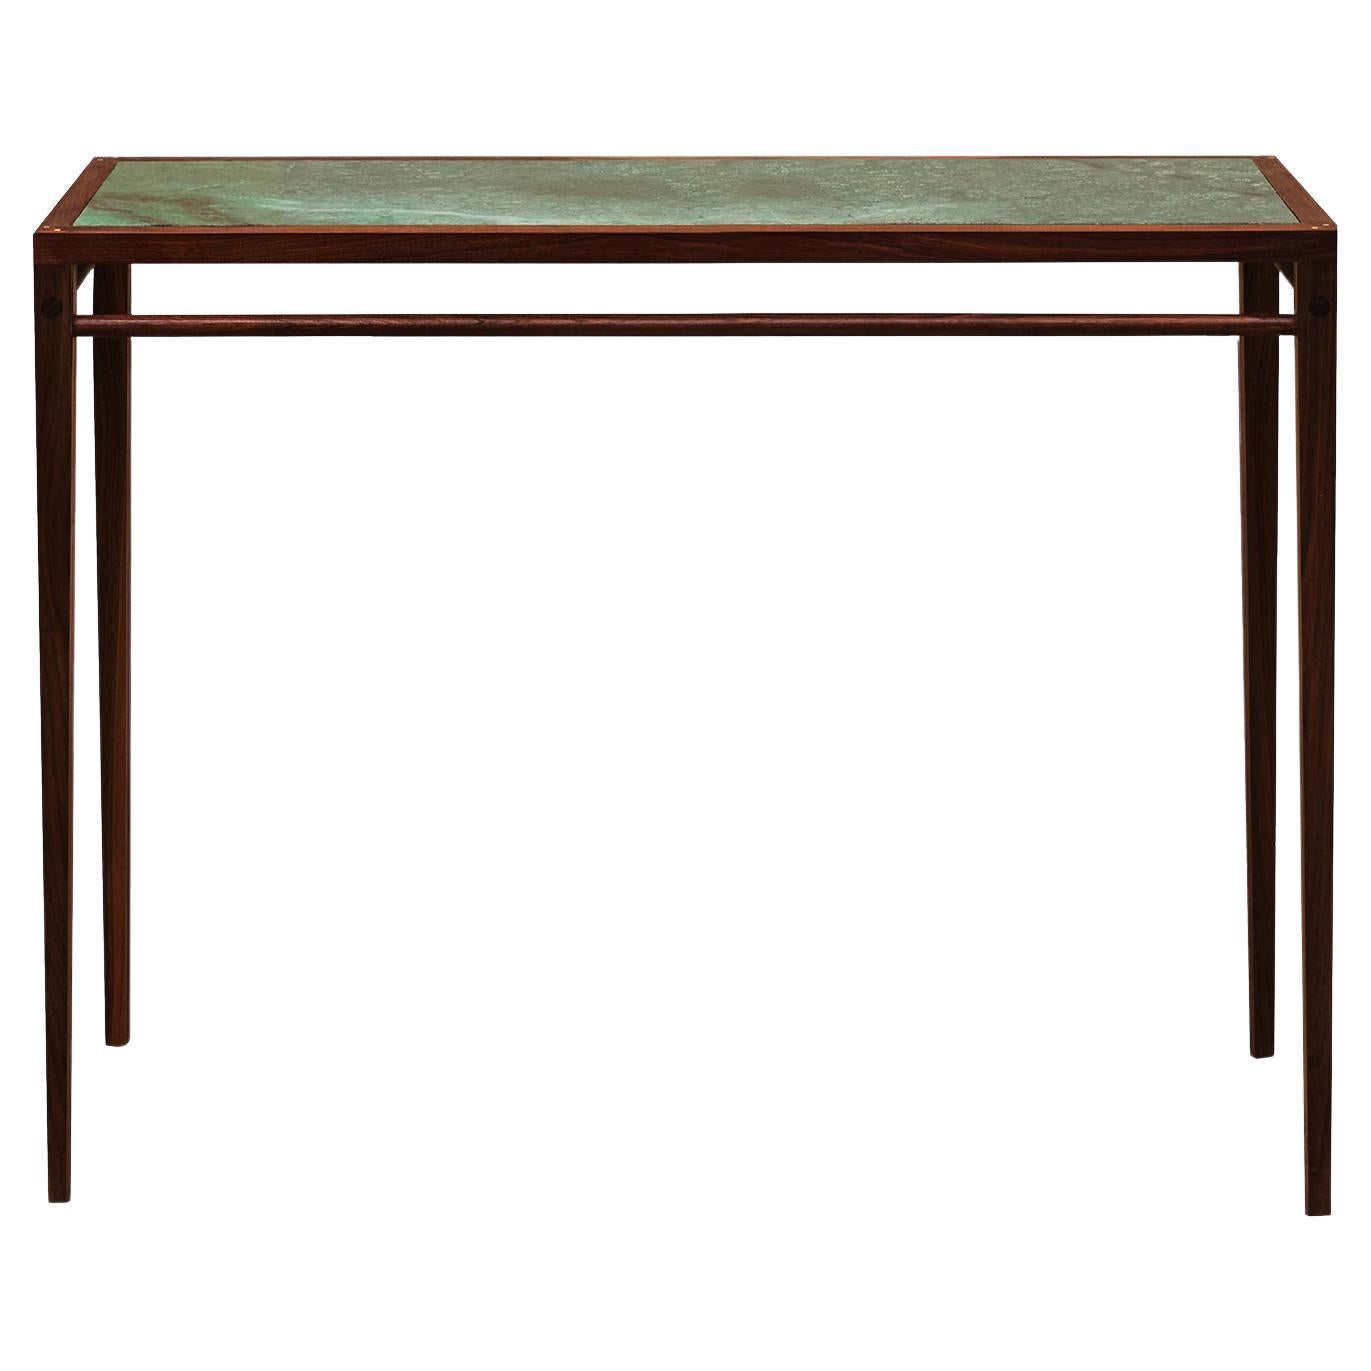 Matang, Ganga Console, Rectangular Wood and Marble Table